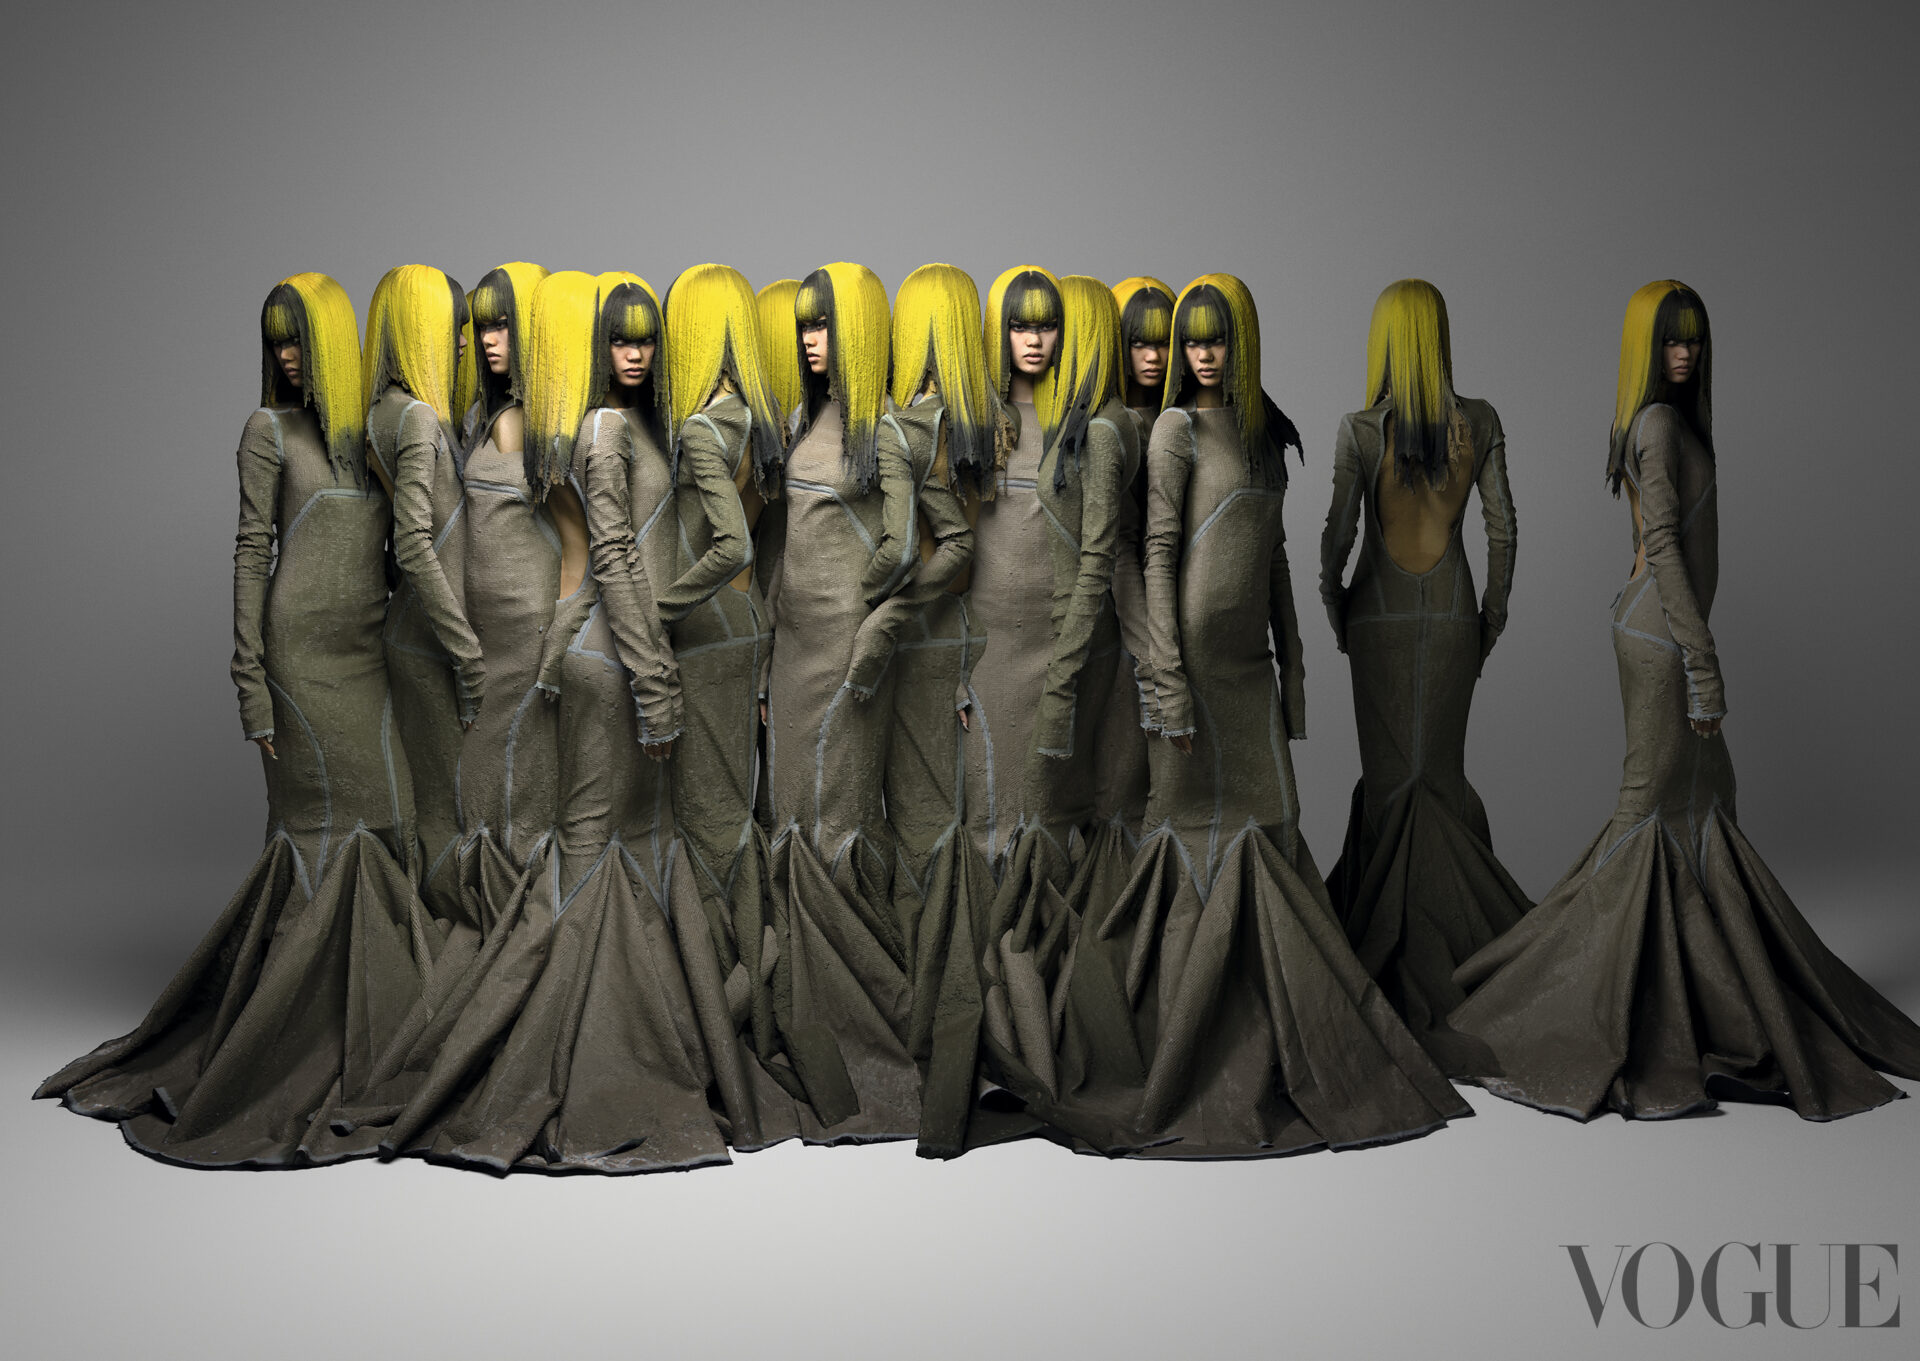 Vogue China: Fashion’s New Volumetric Expression